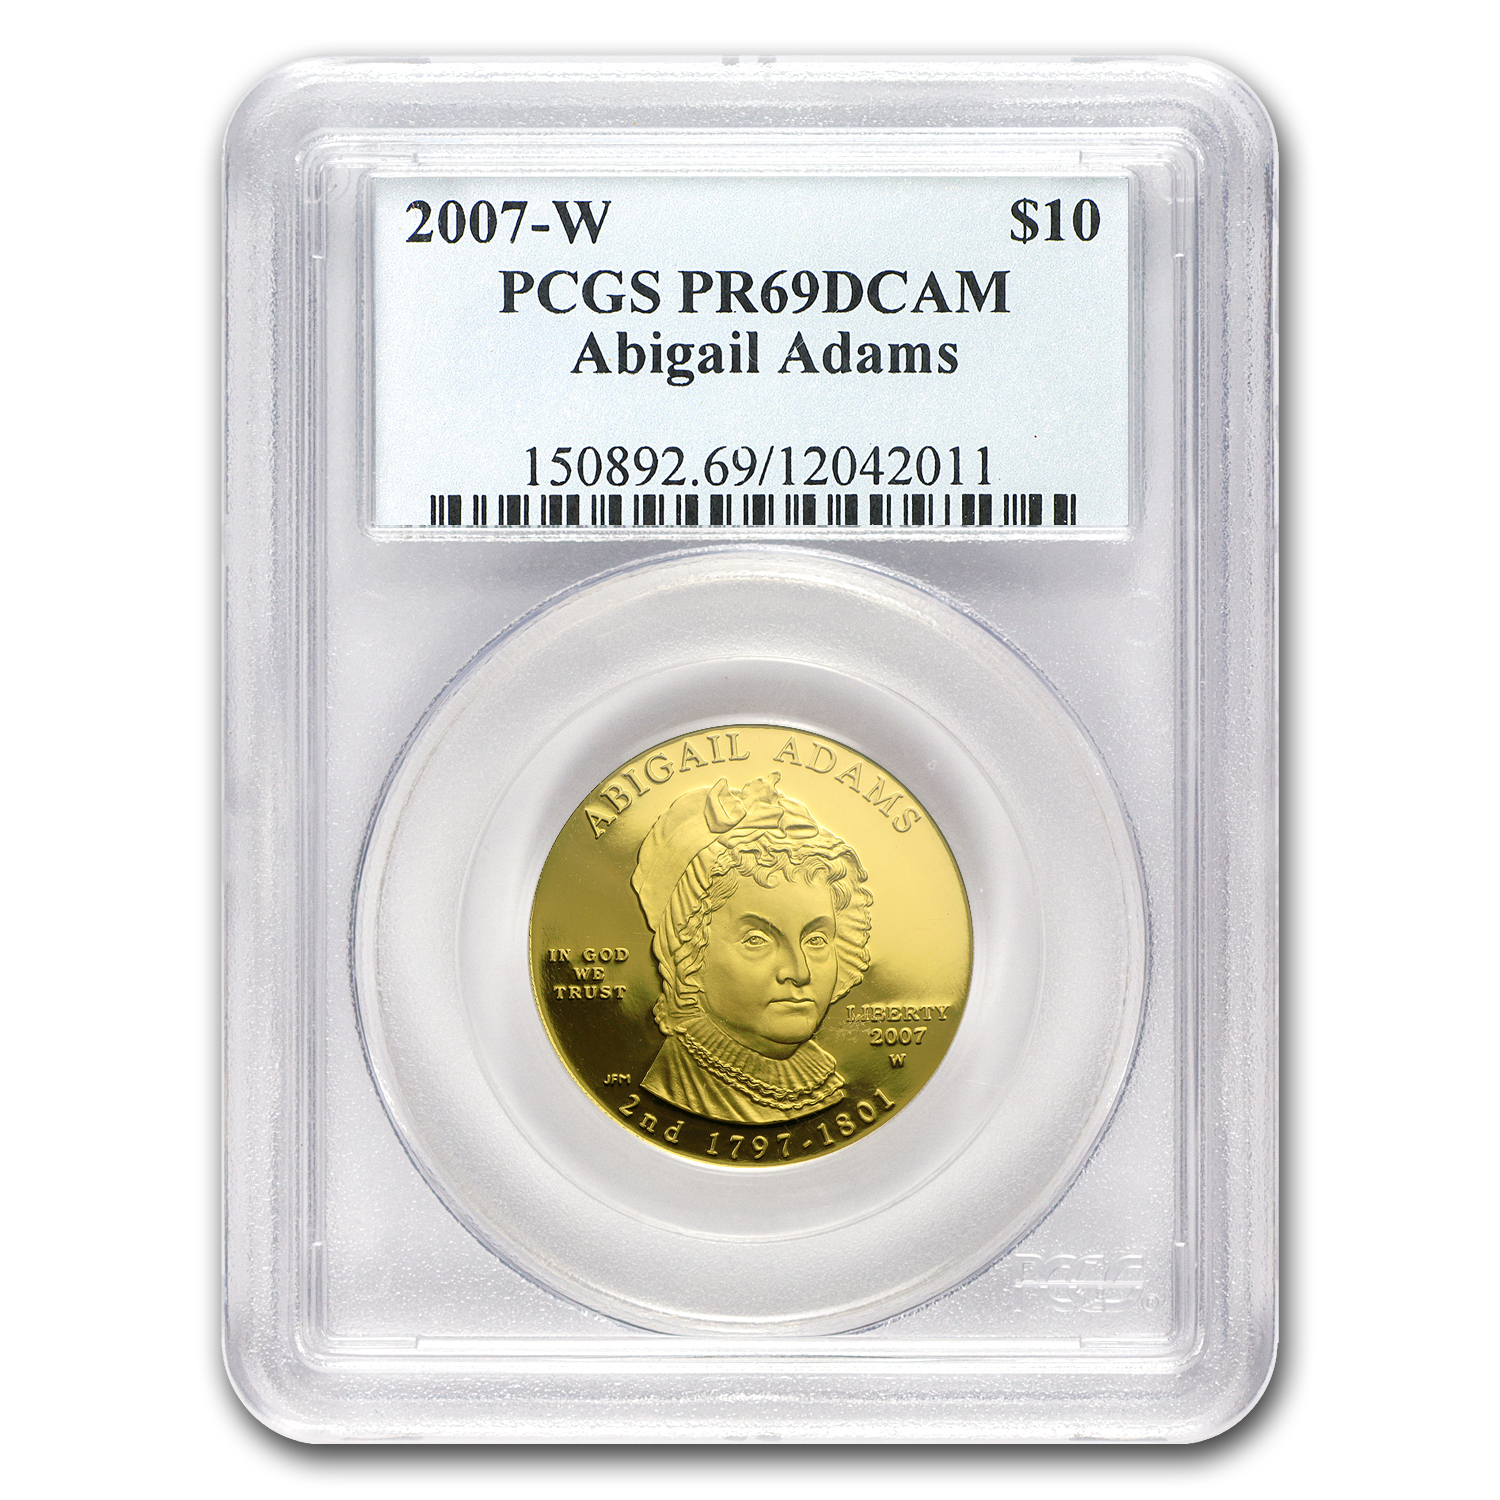 Buy 2007-W 1/2 oz Proof Gold Abigail Adams PR-69 PCGS - Click Image to Close